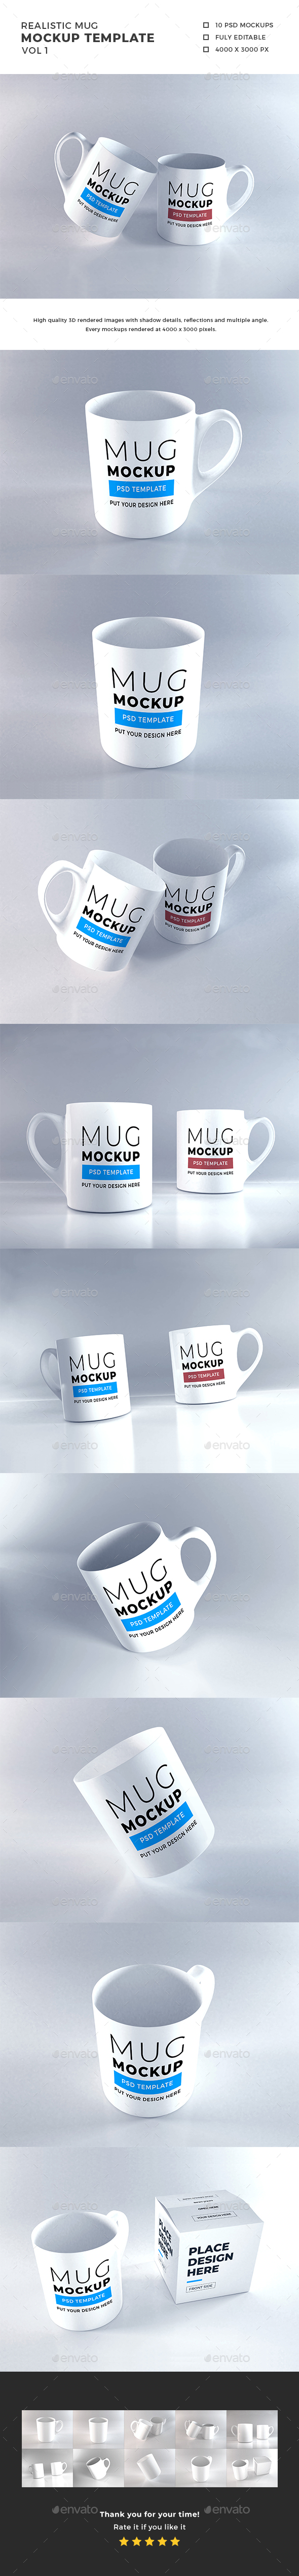 [DOWNLOAD]Realistic Mug Mockup Template Vol 1